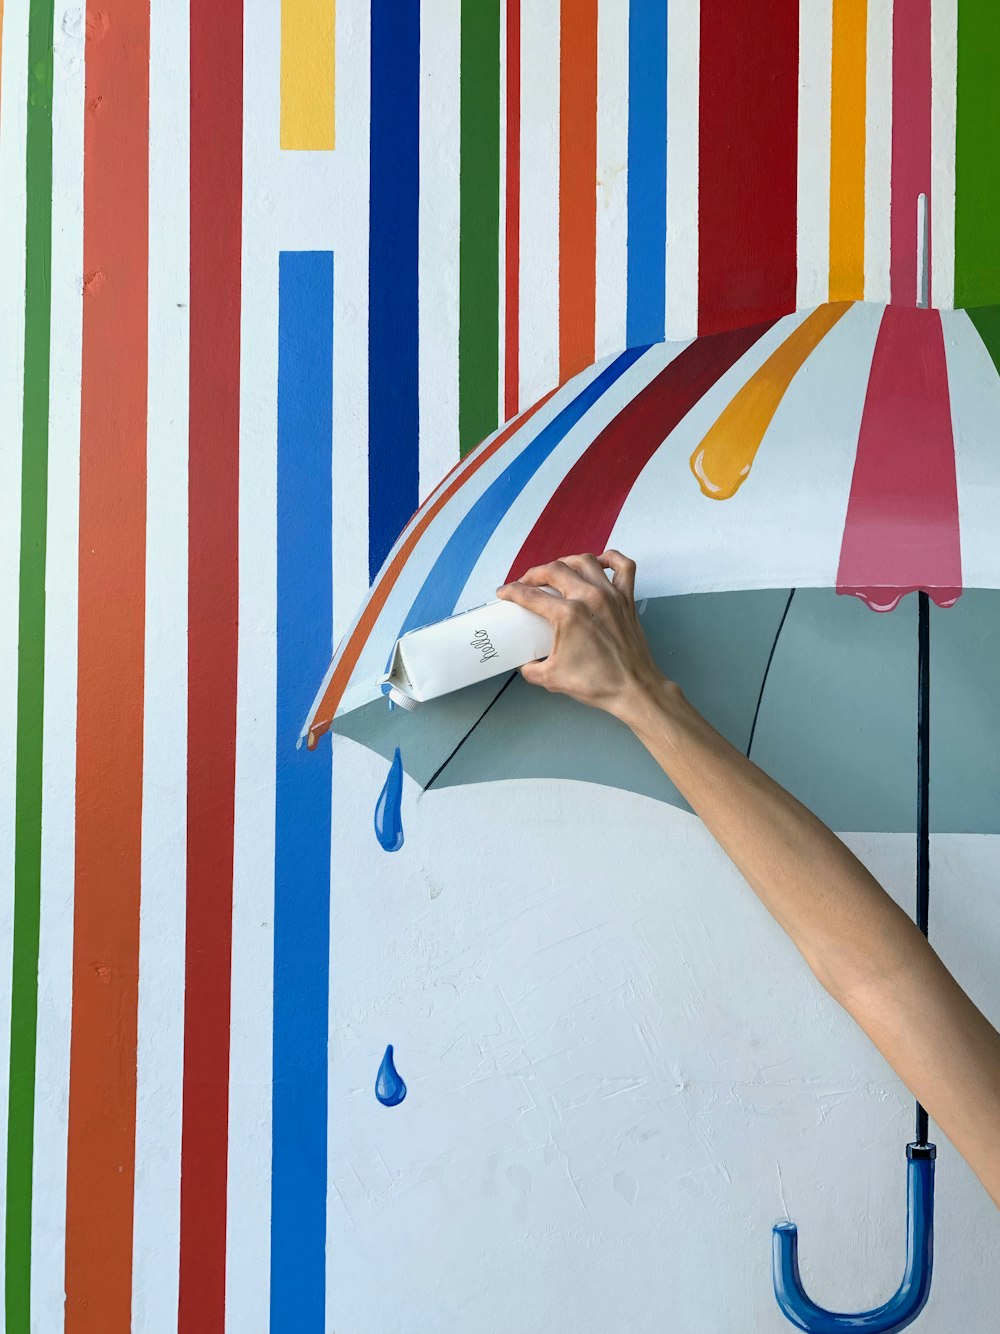 Una persona sosteniendo un paraguas frente a una pared colorida